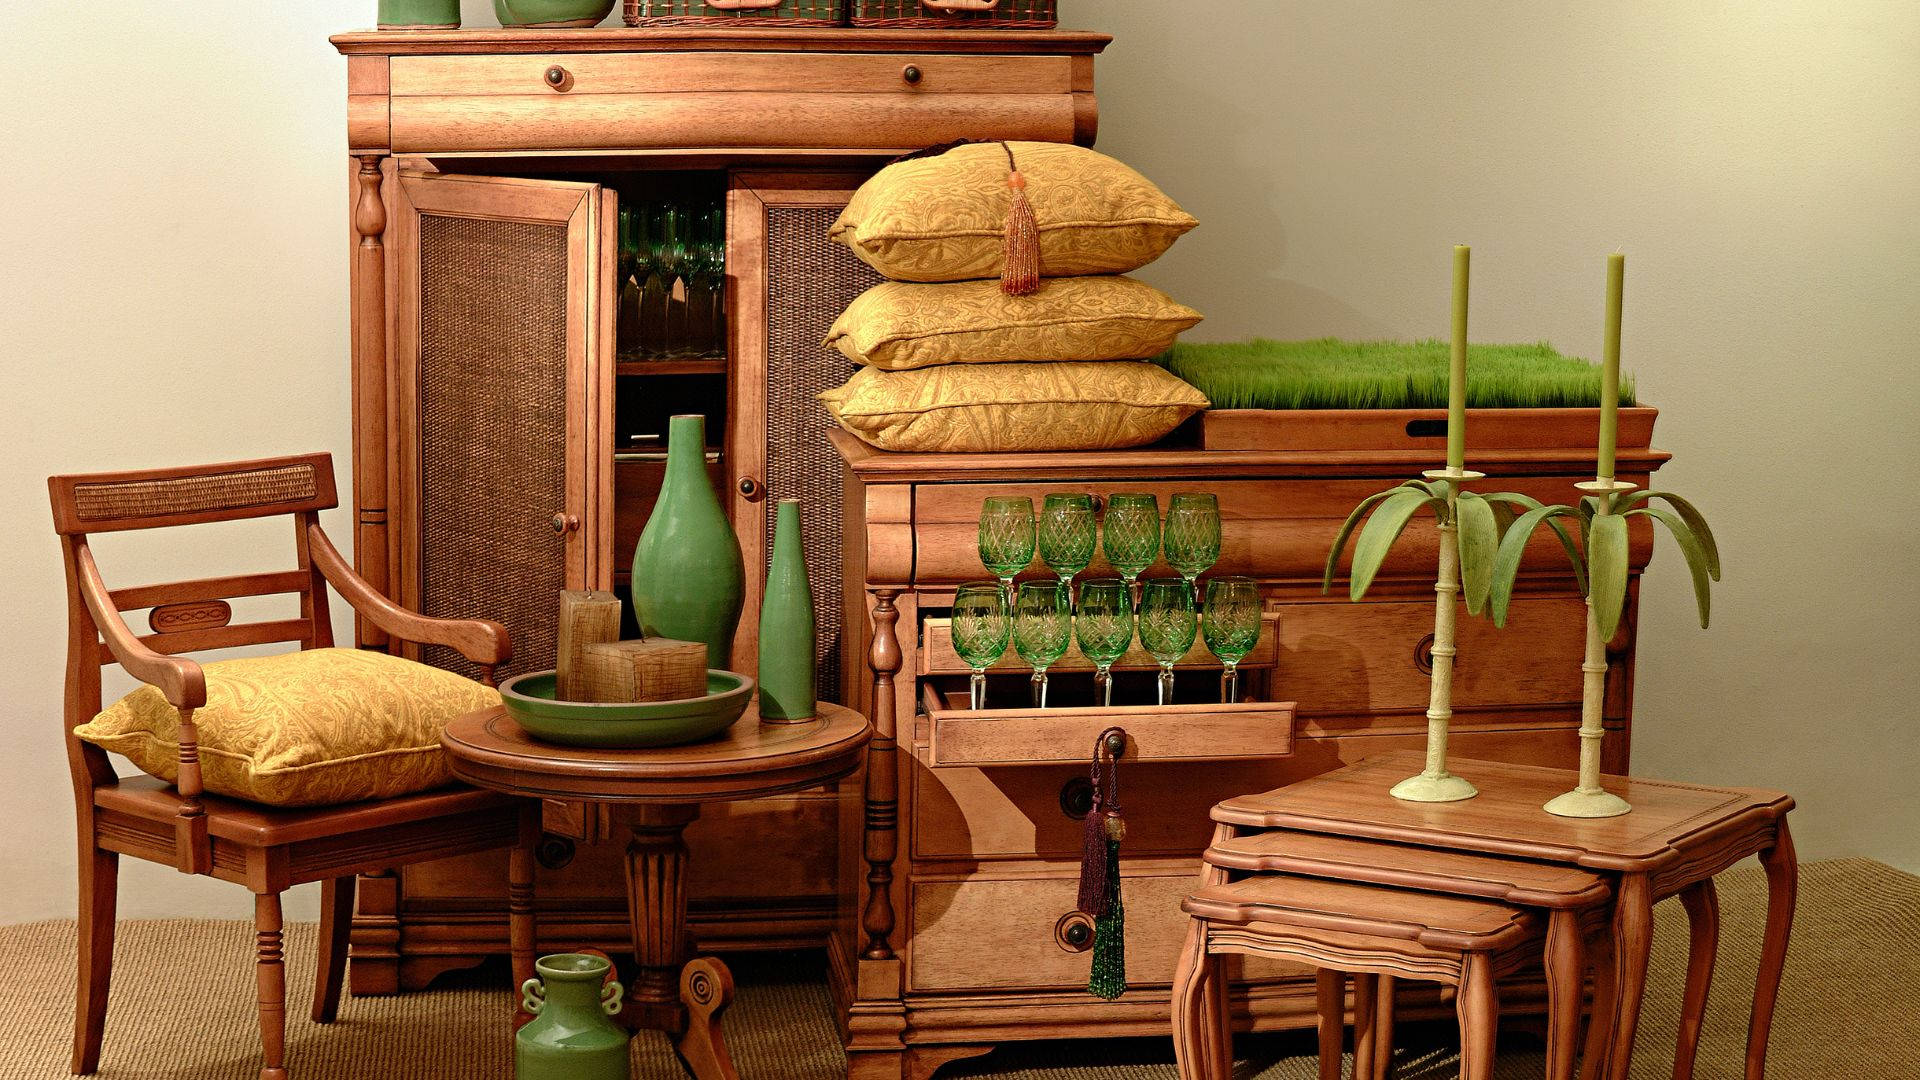 Mid-century Wooden Furniture Background